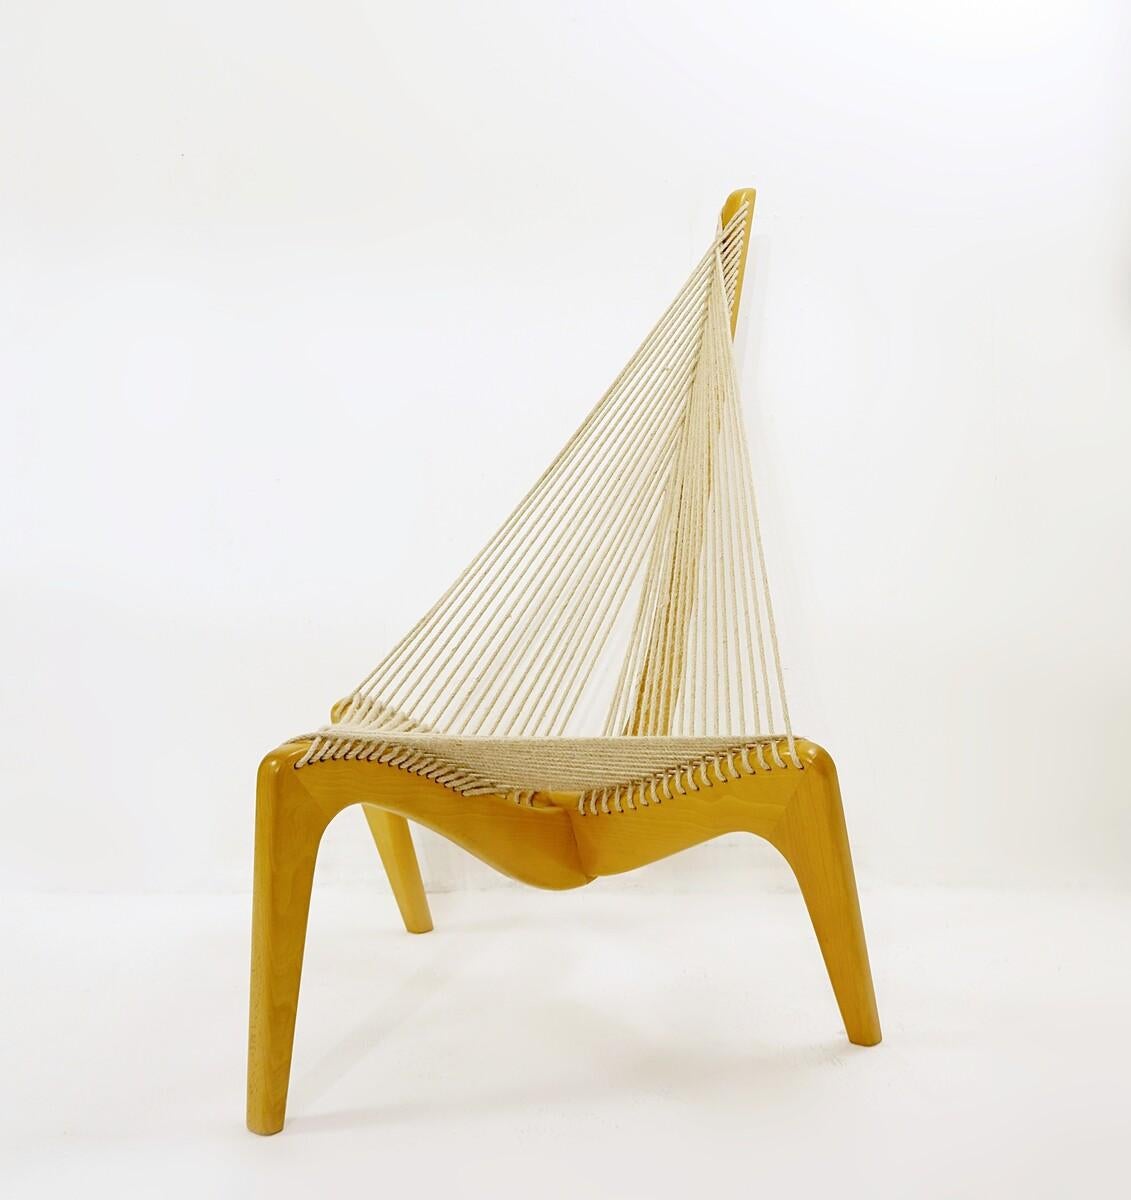 ''harp chair'' by Jørgen Høvelskov and Jorgen Christensen - Denmark, 1963.